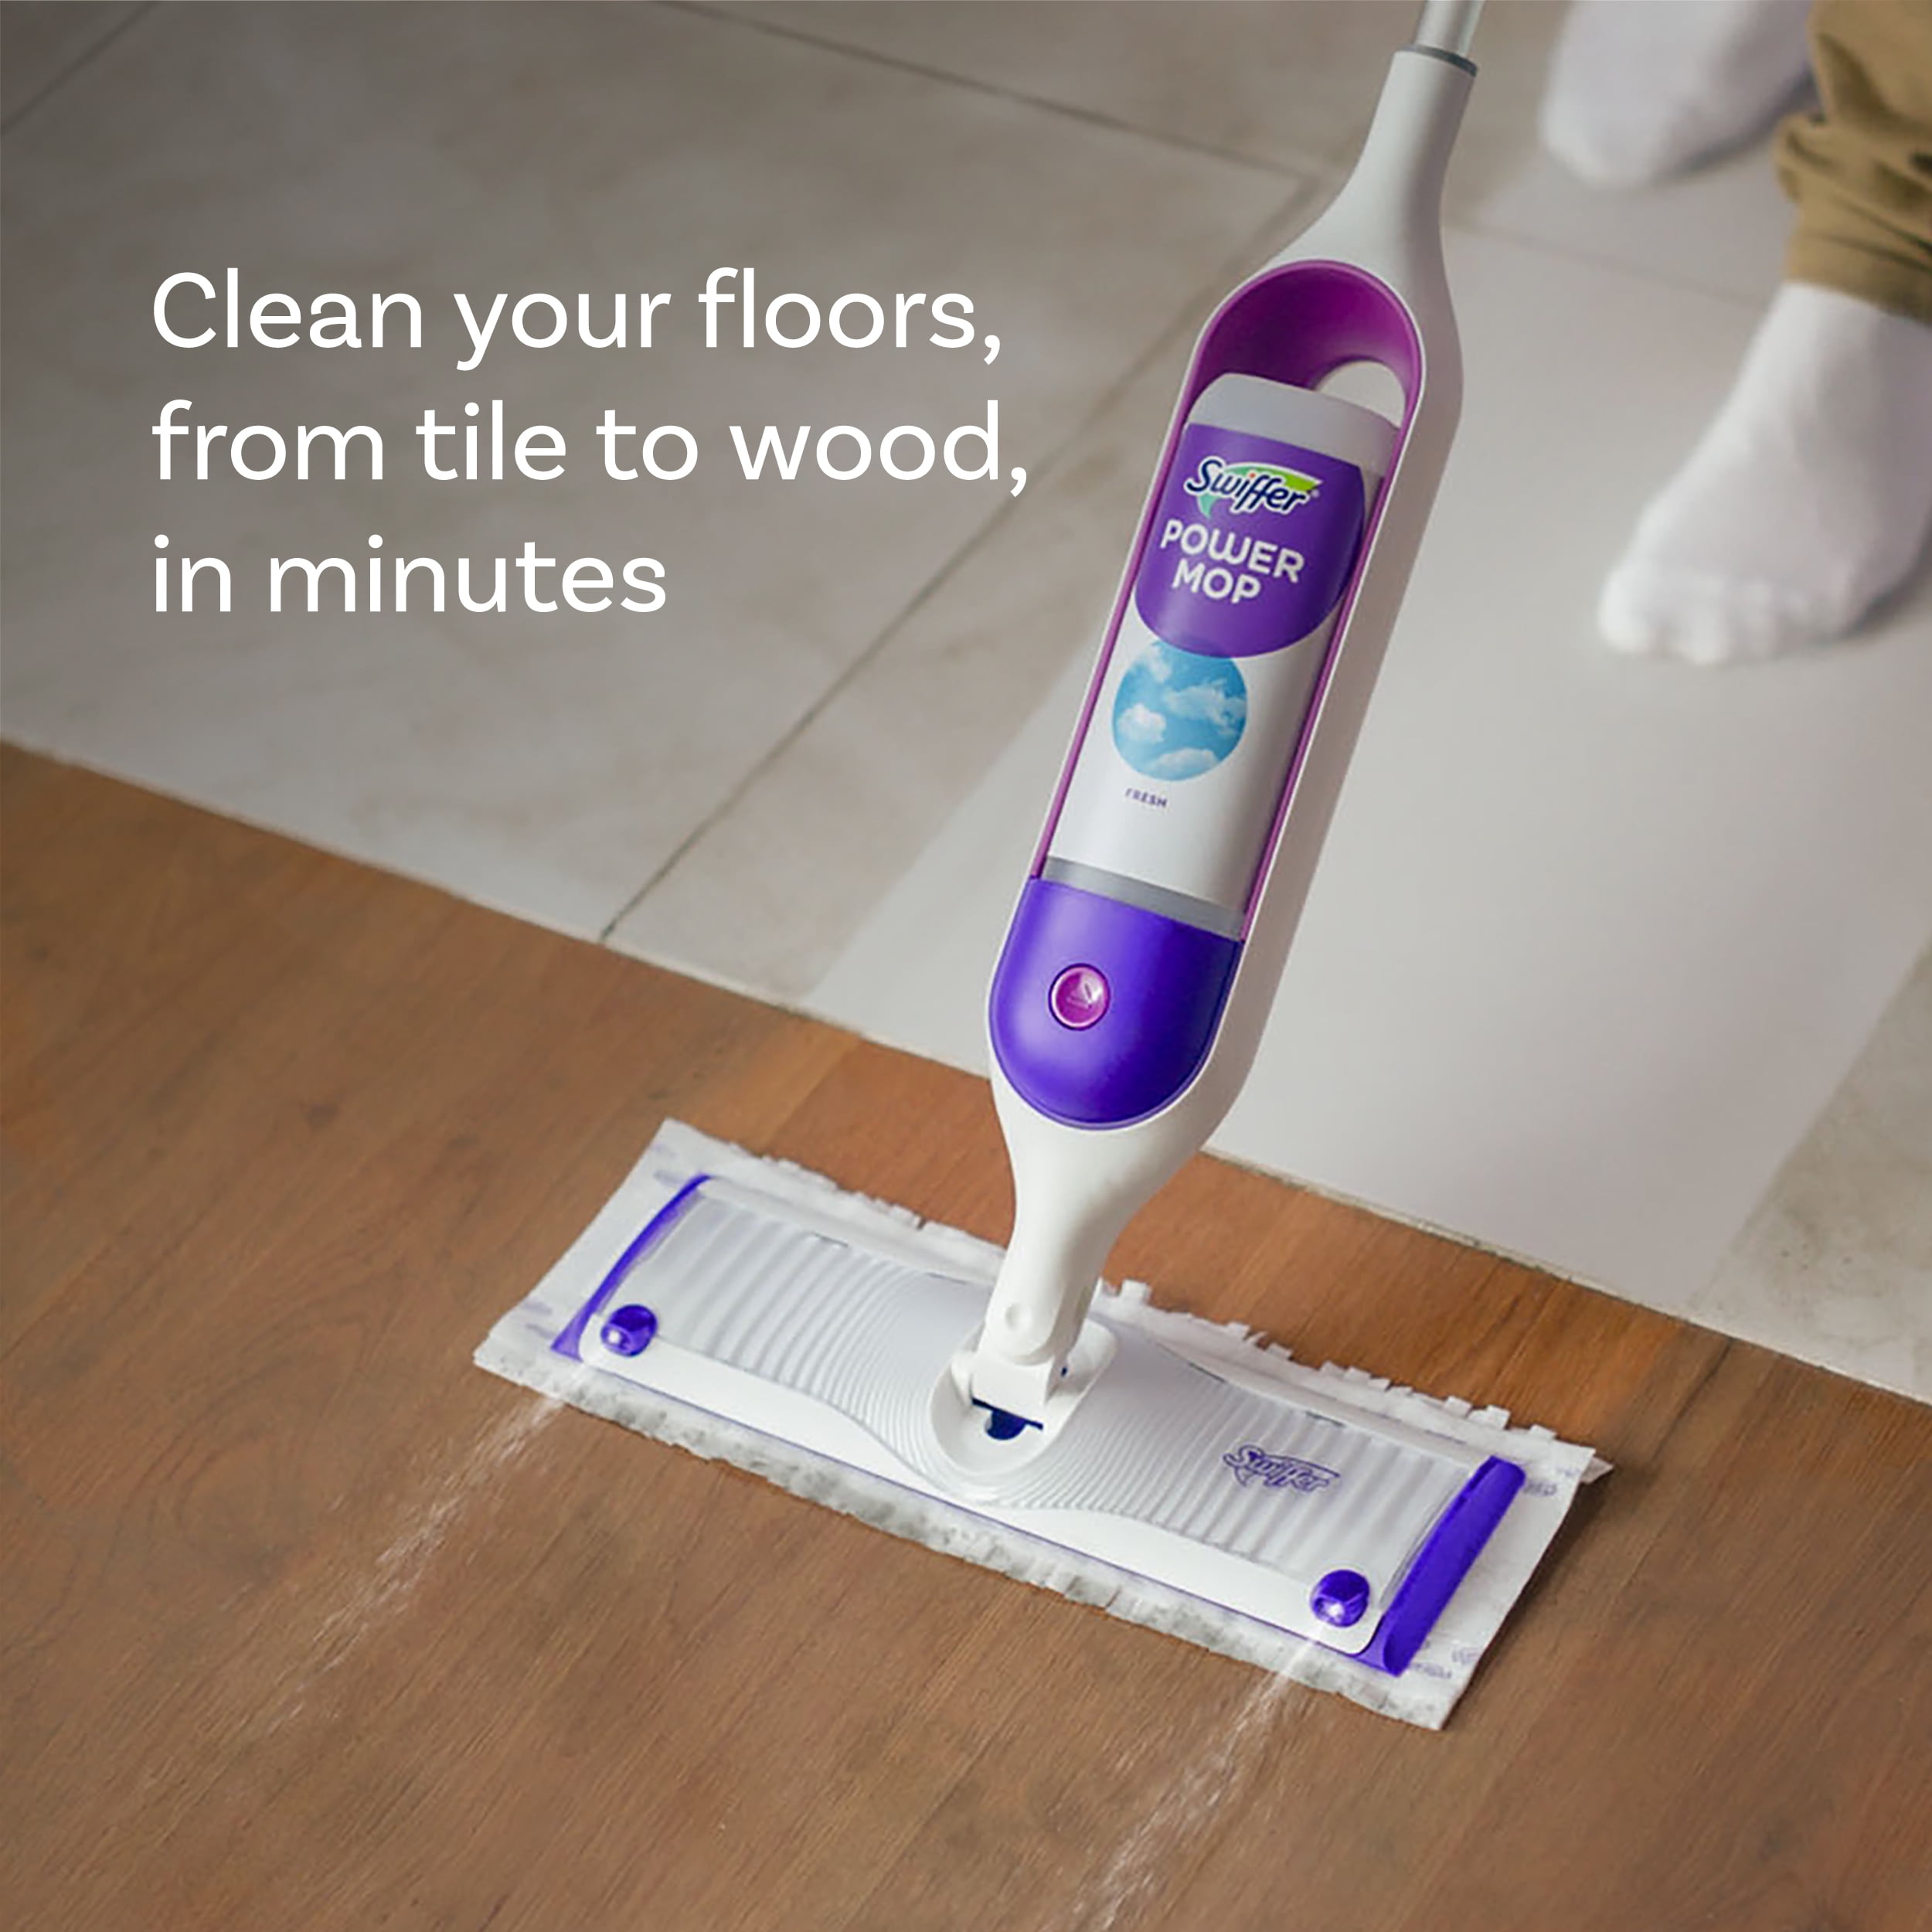 Swiffer PowerMop Liquid Floor Cleaner Solution, Lavender, 25.3 oz 